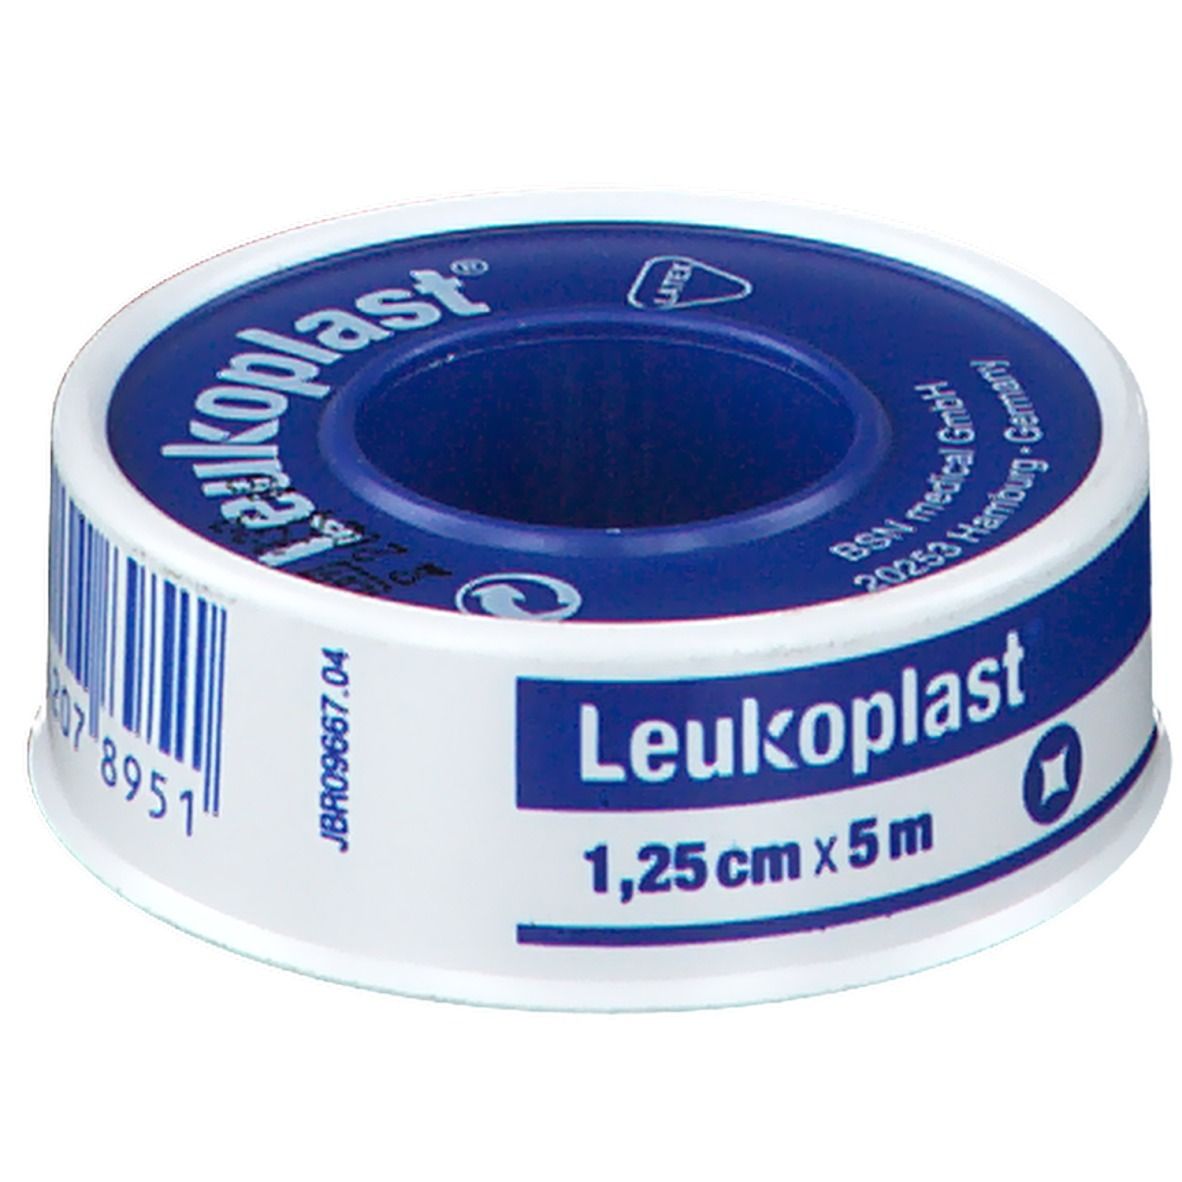 Leukoplast® Impermeable Fourreau 1,25 cm x 5 m